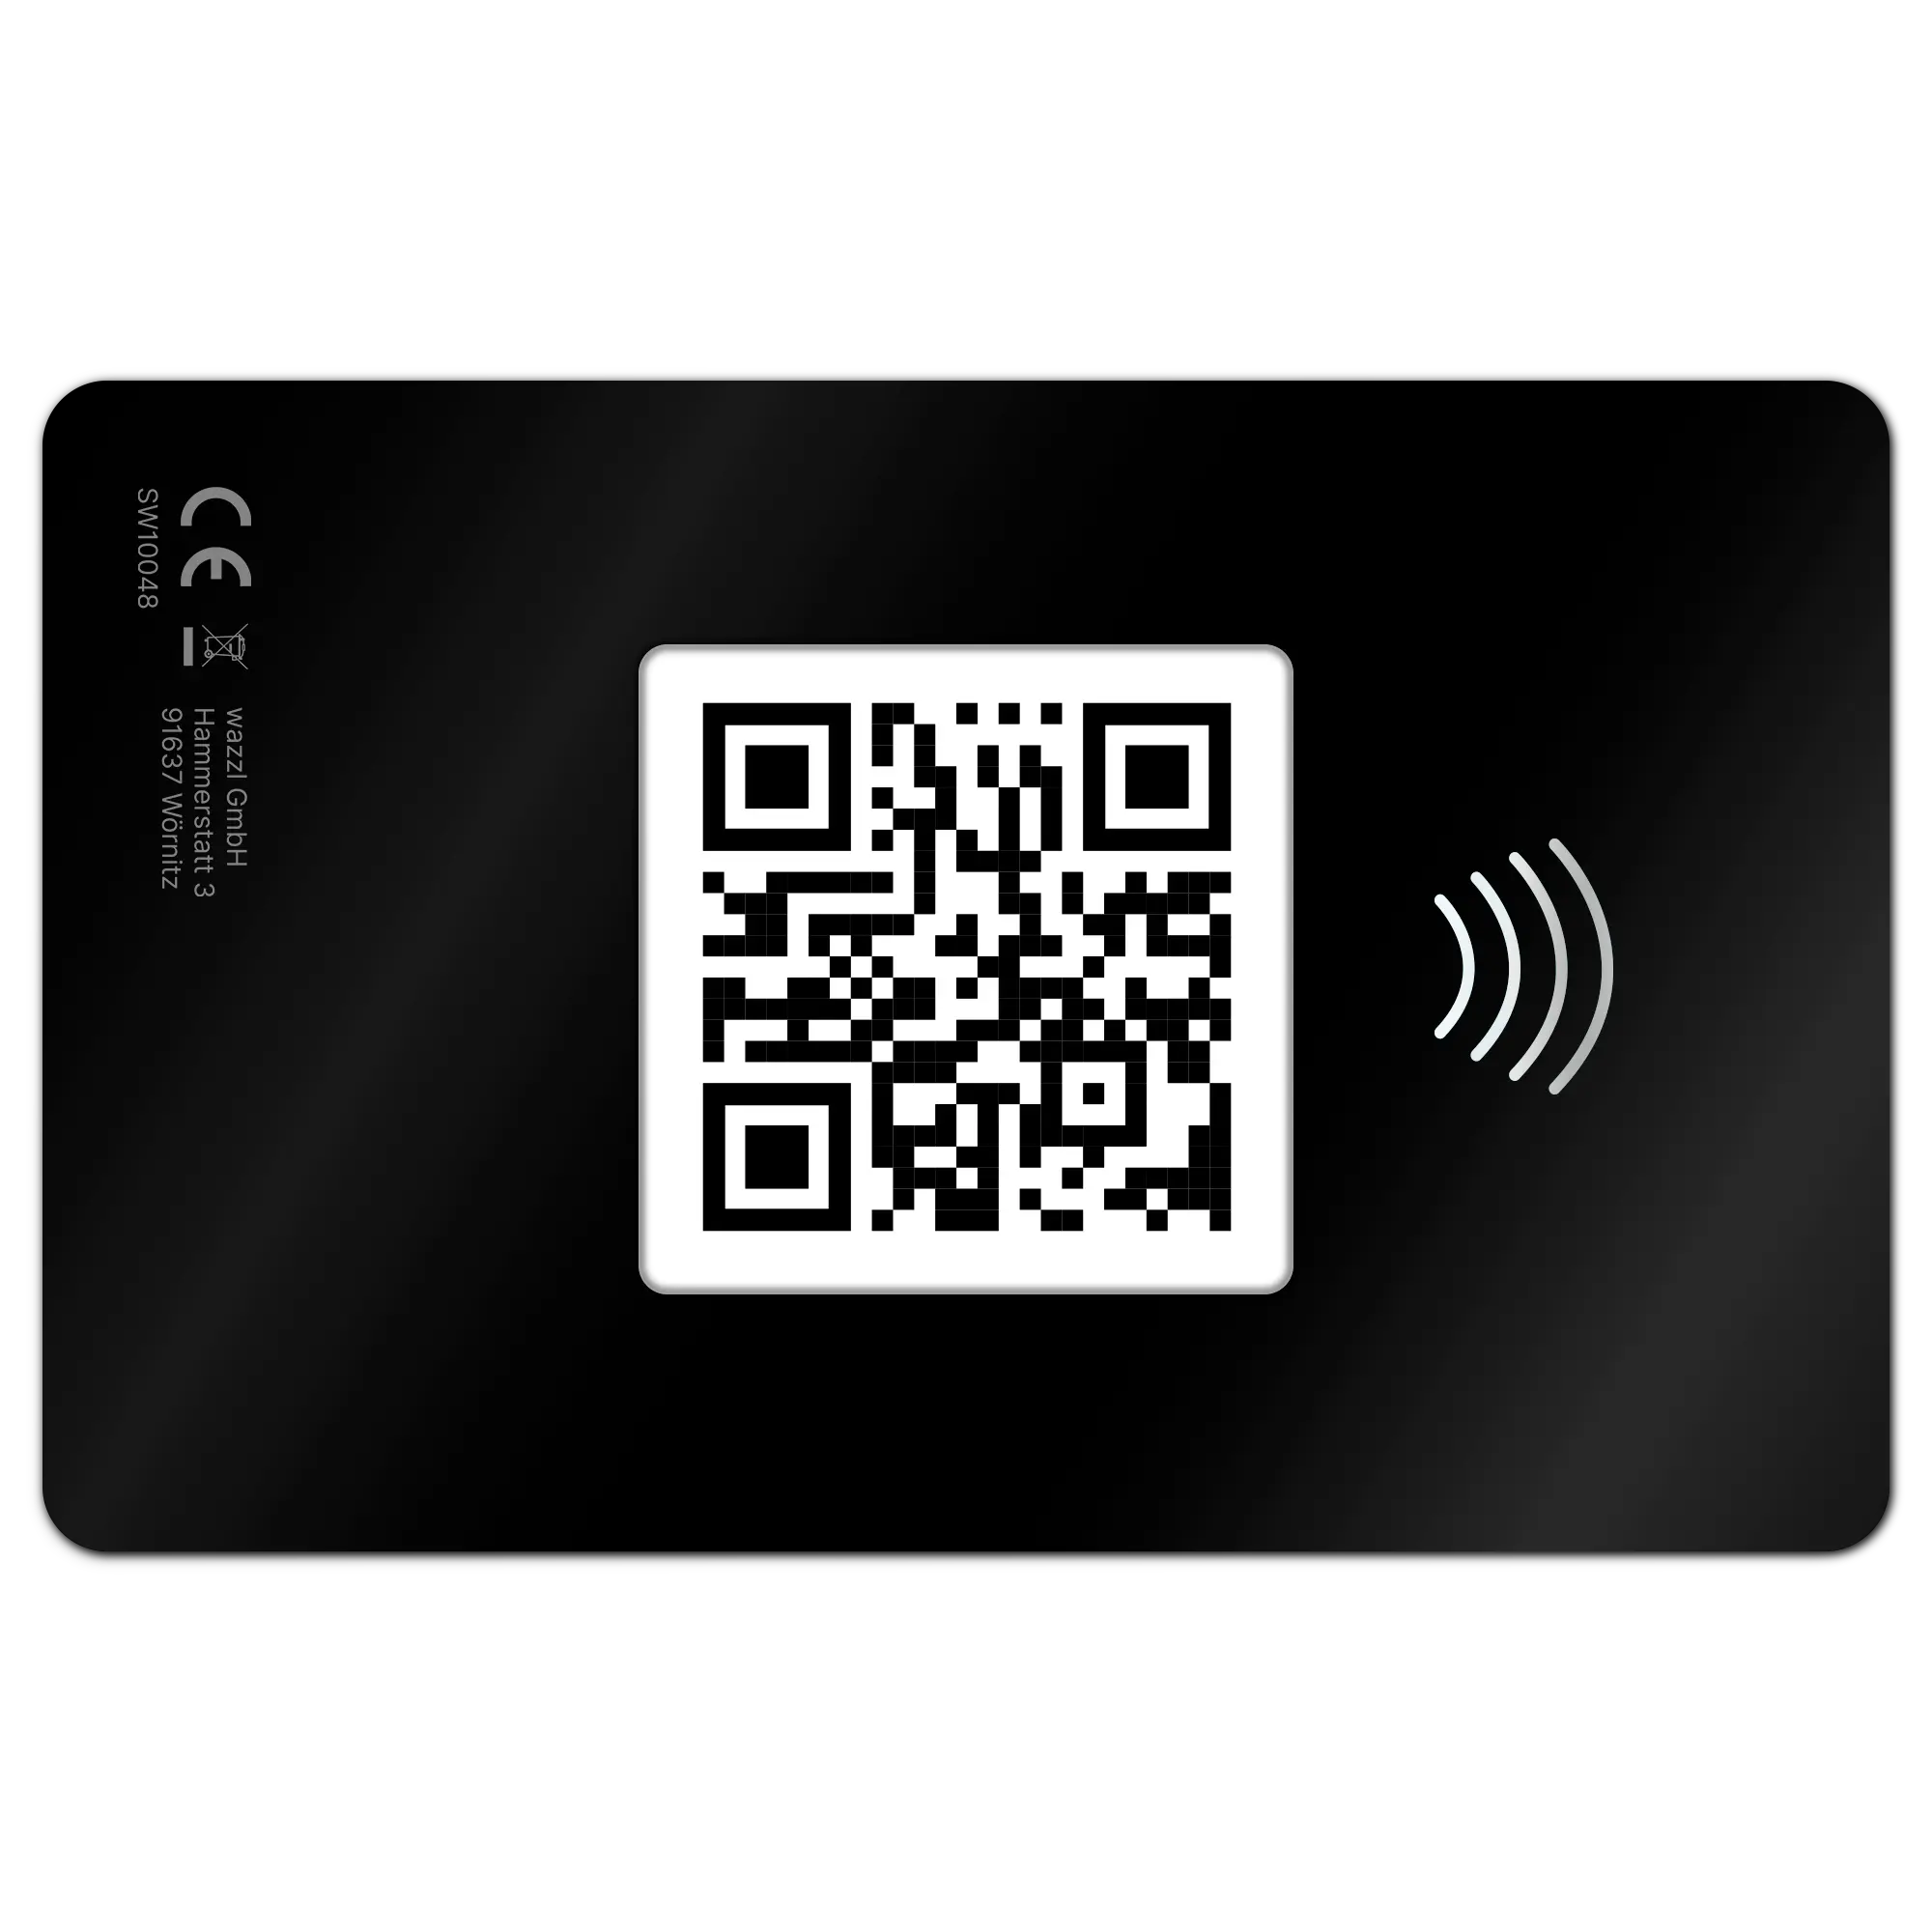 Custom metal card - Digital business card